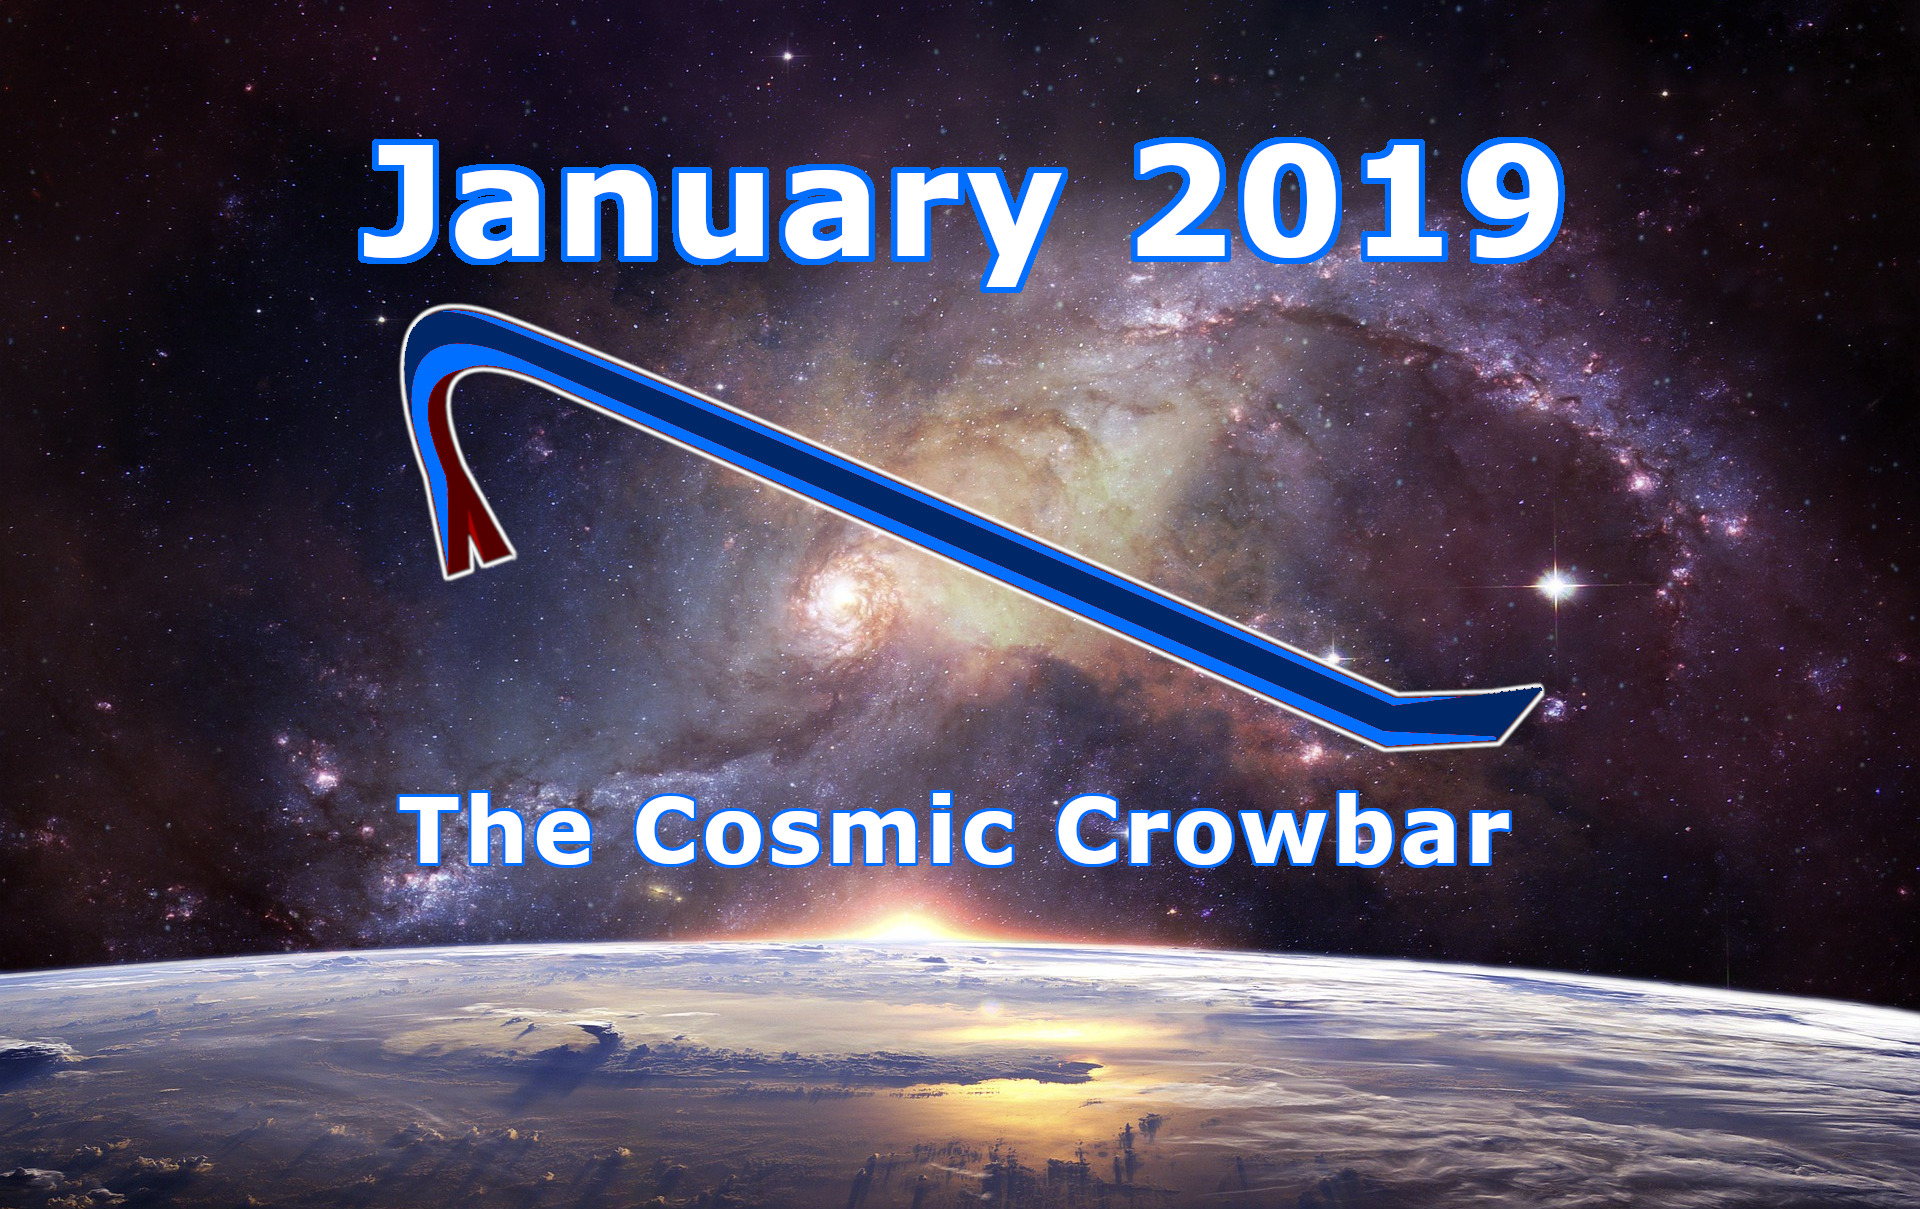 January 2019: The Cosmic Crowbar